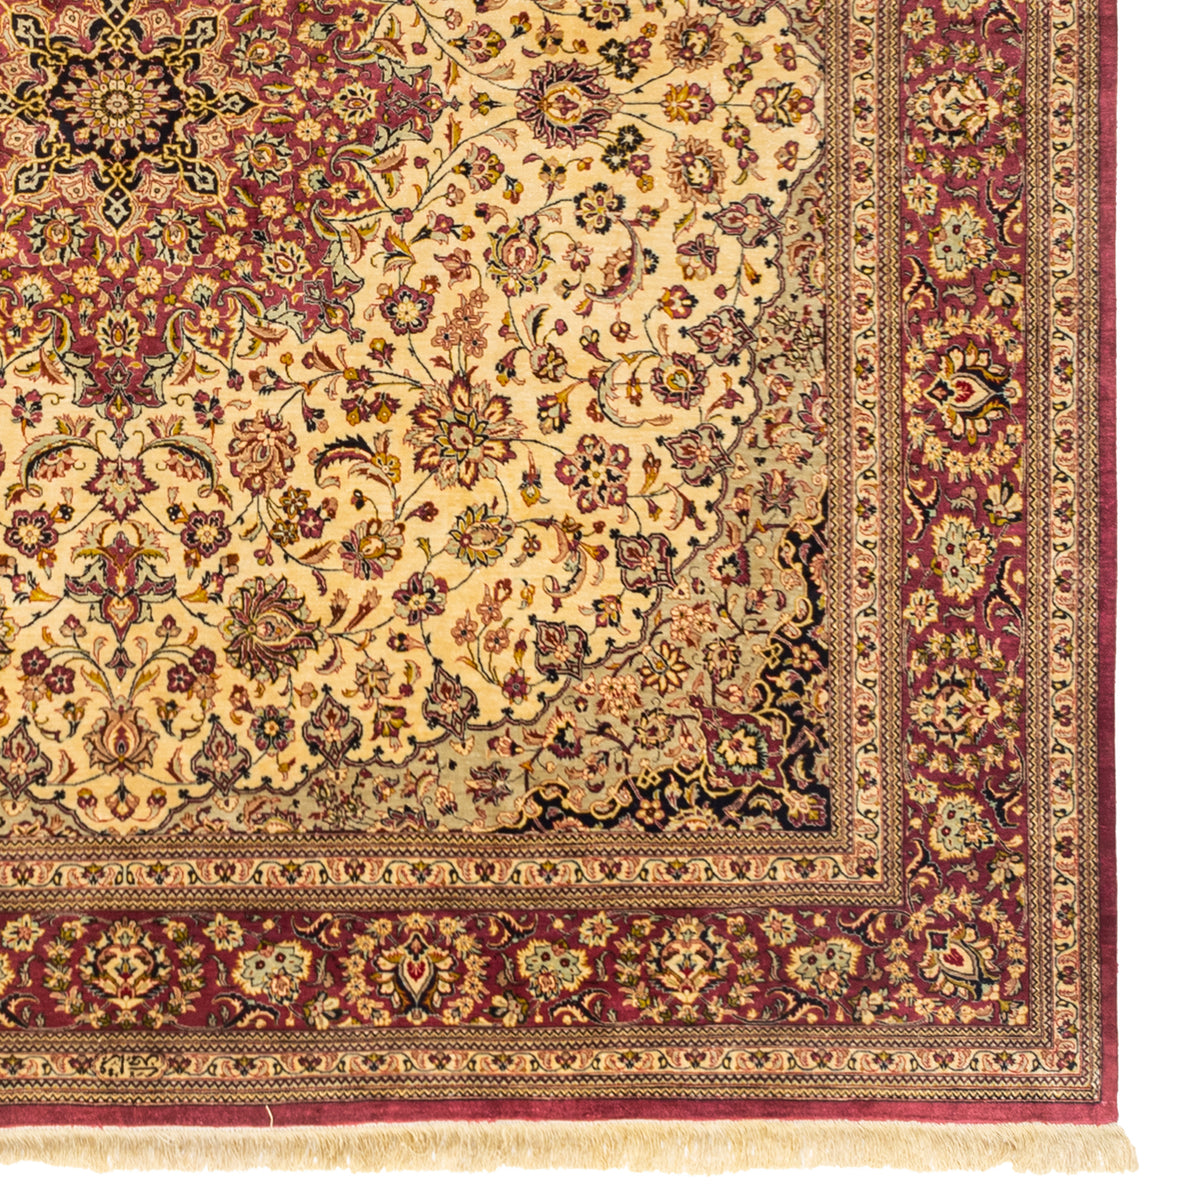 Super Fine Hand-knotted 100% Qum Persian Silk Rug 250cm x 250cm ( SIGNED)